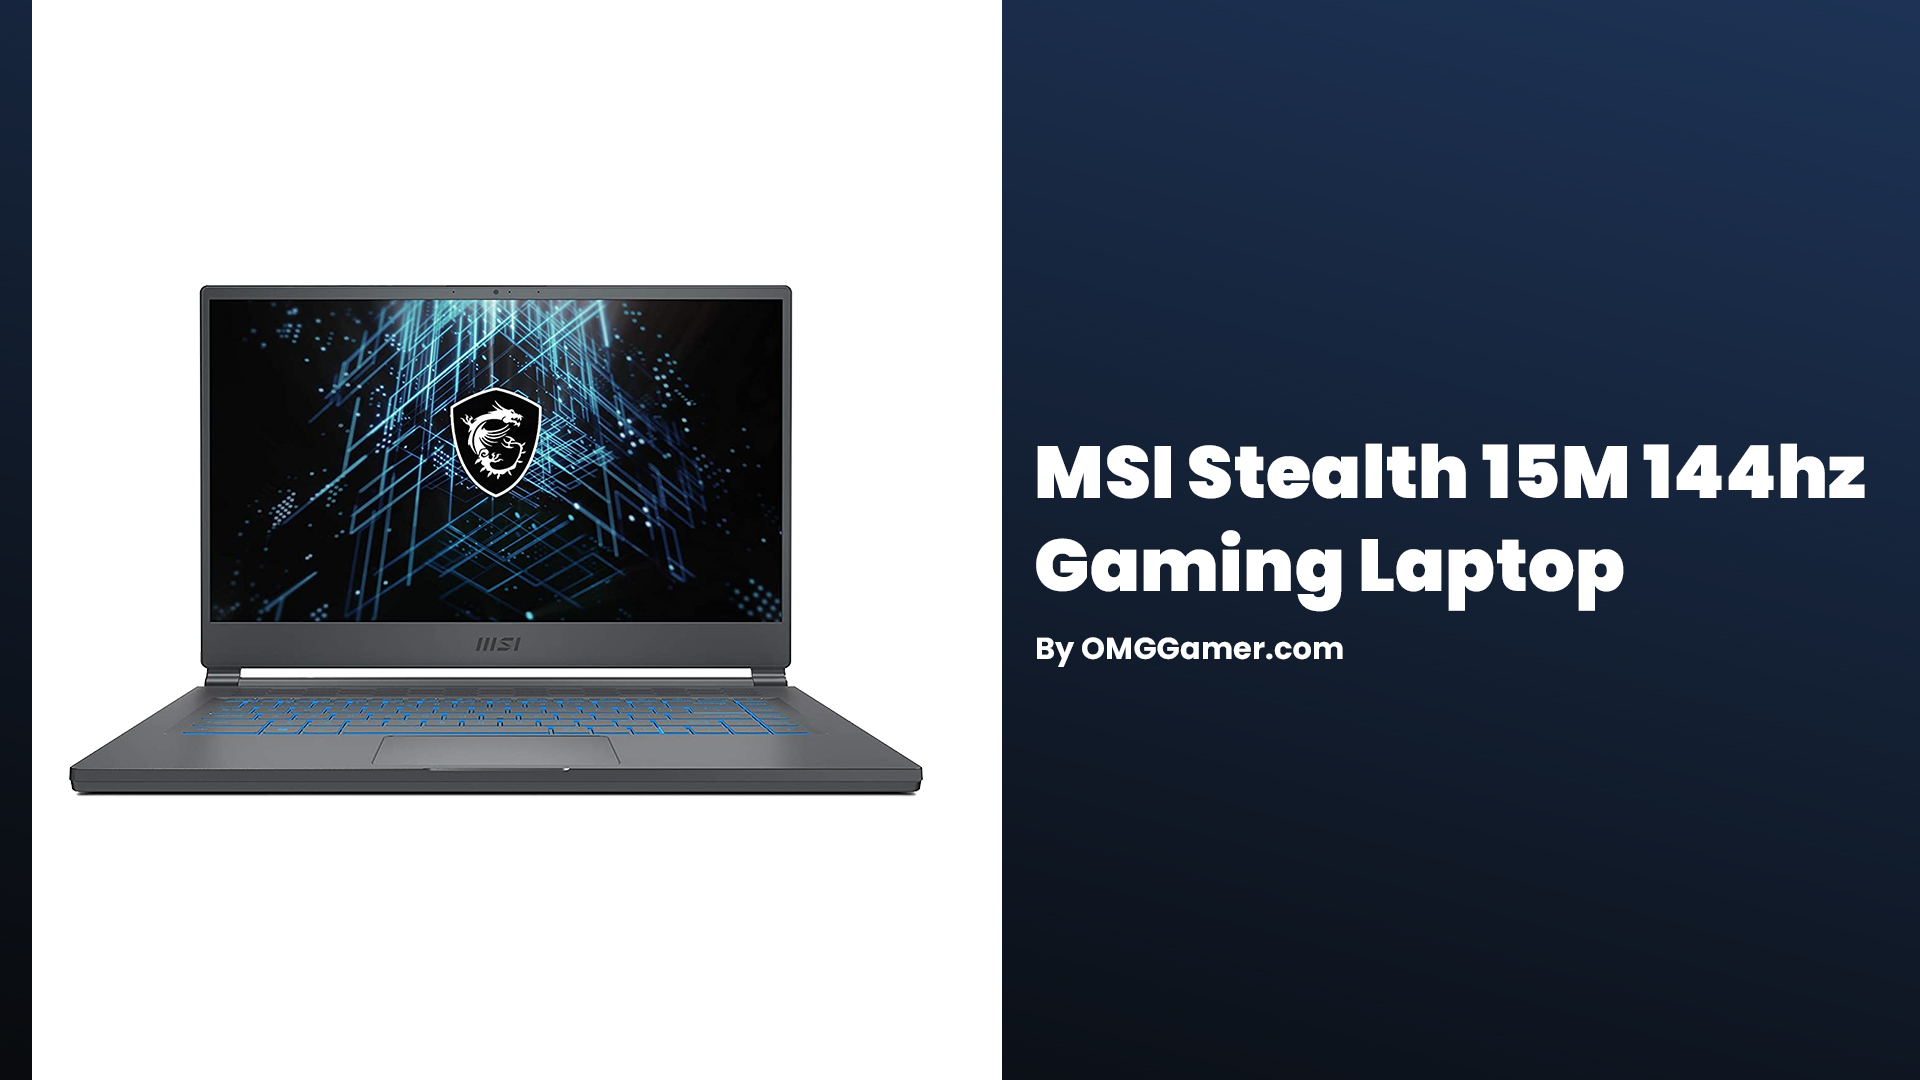 MSI Stealth 15M 144hz Laptop